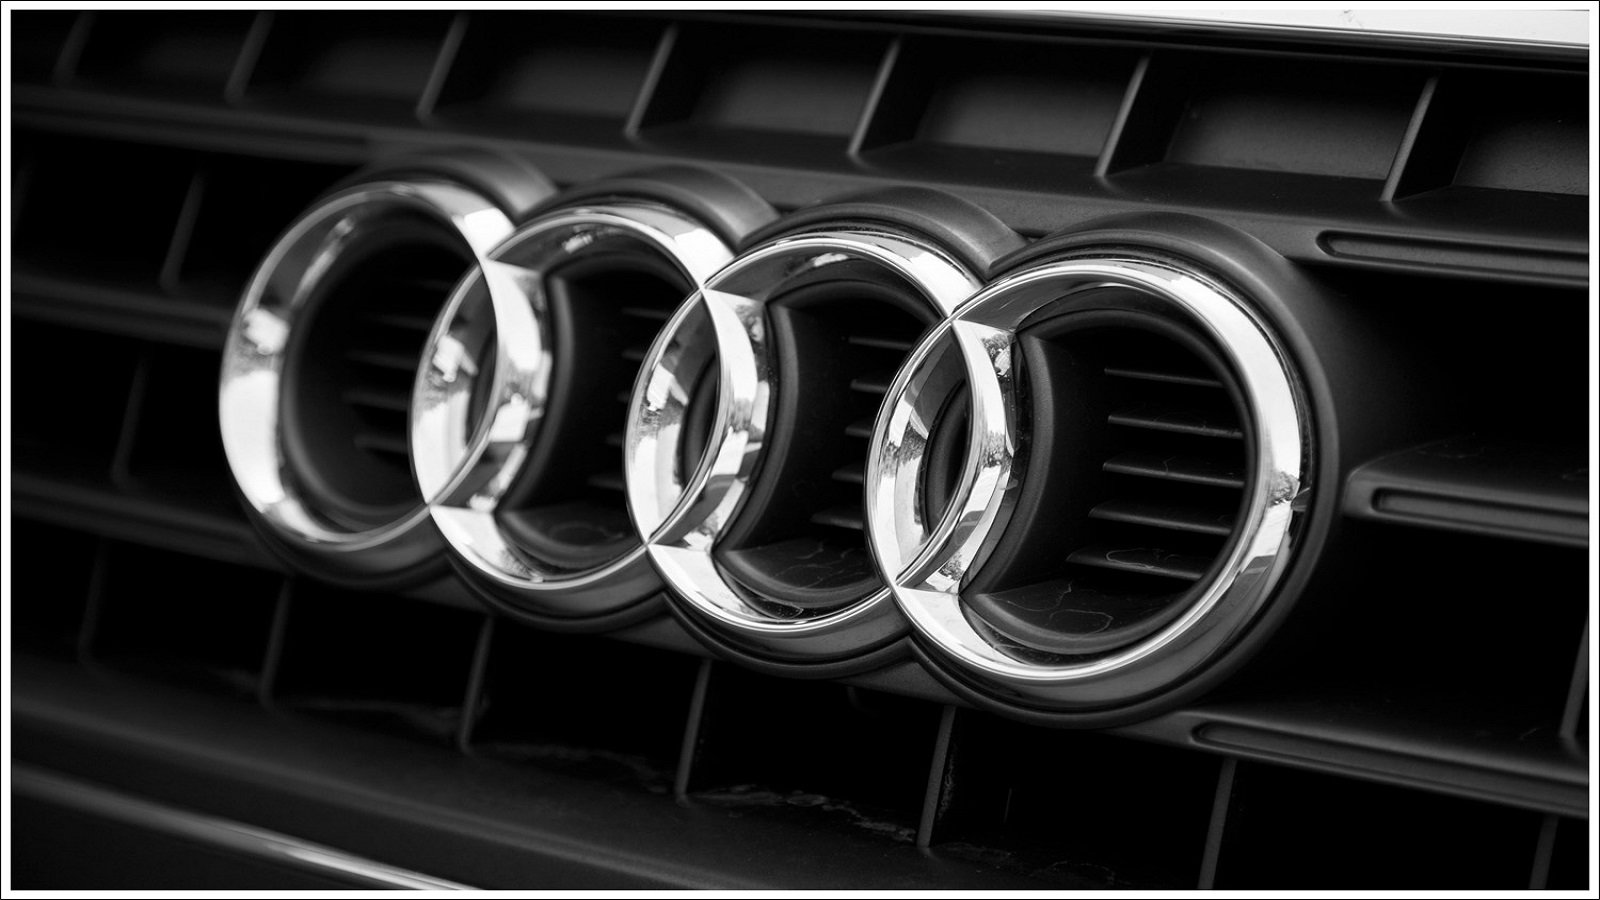 Ways Audi Earned Their Rings (Photos)